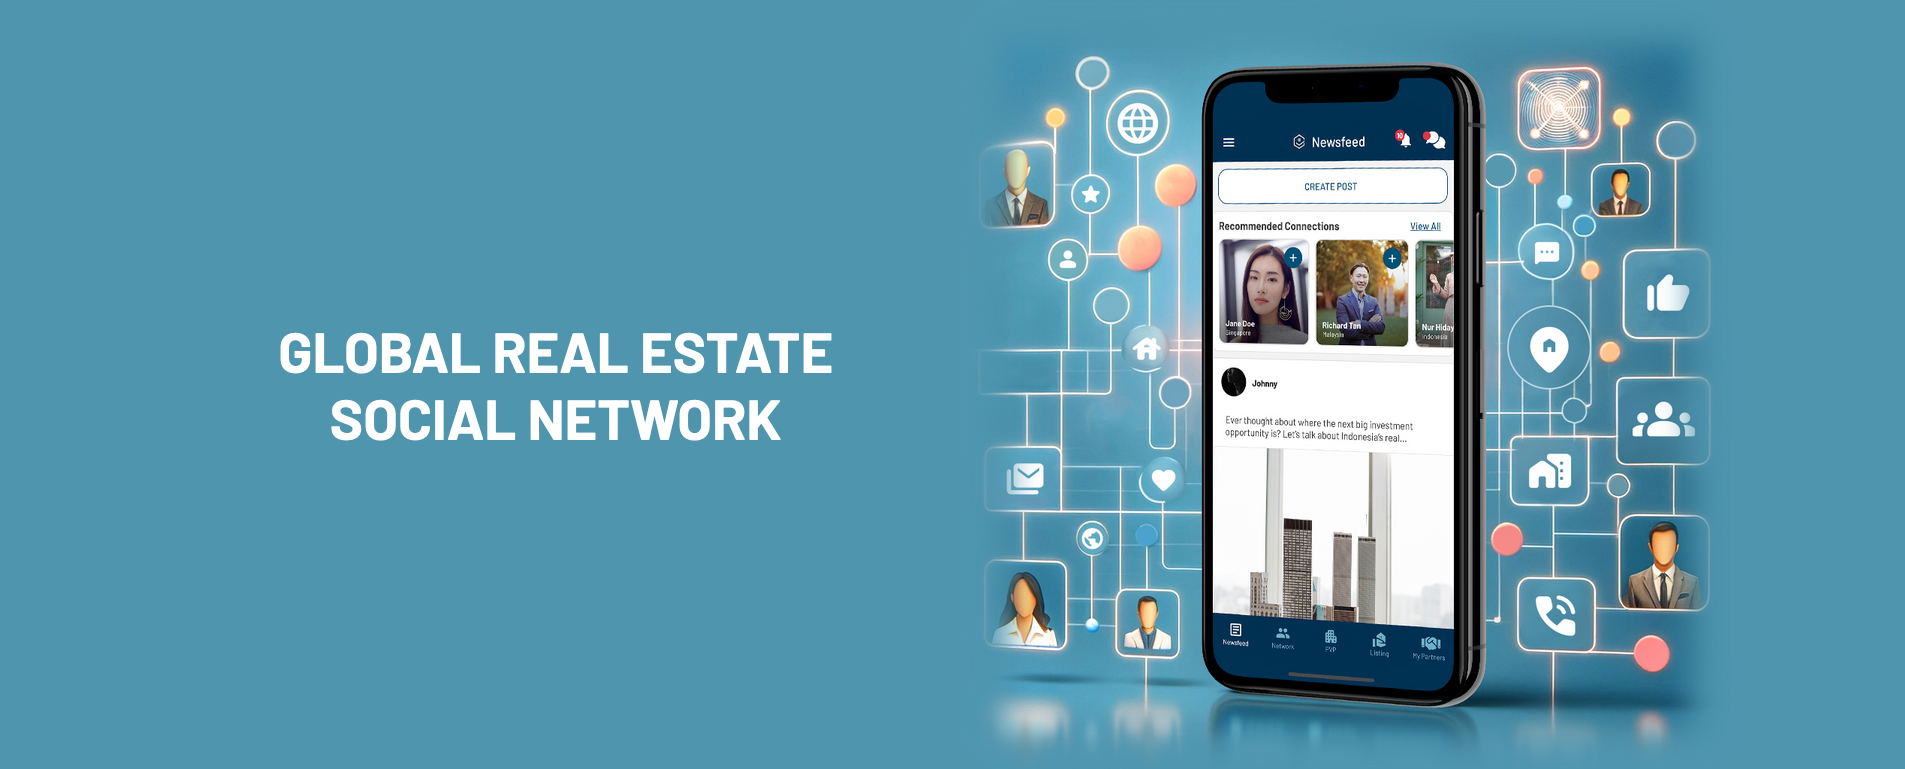 Global Real Estate Social Network